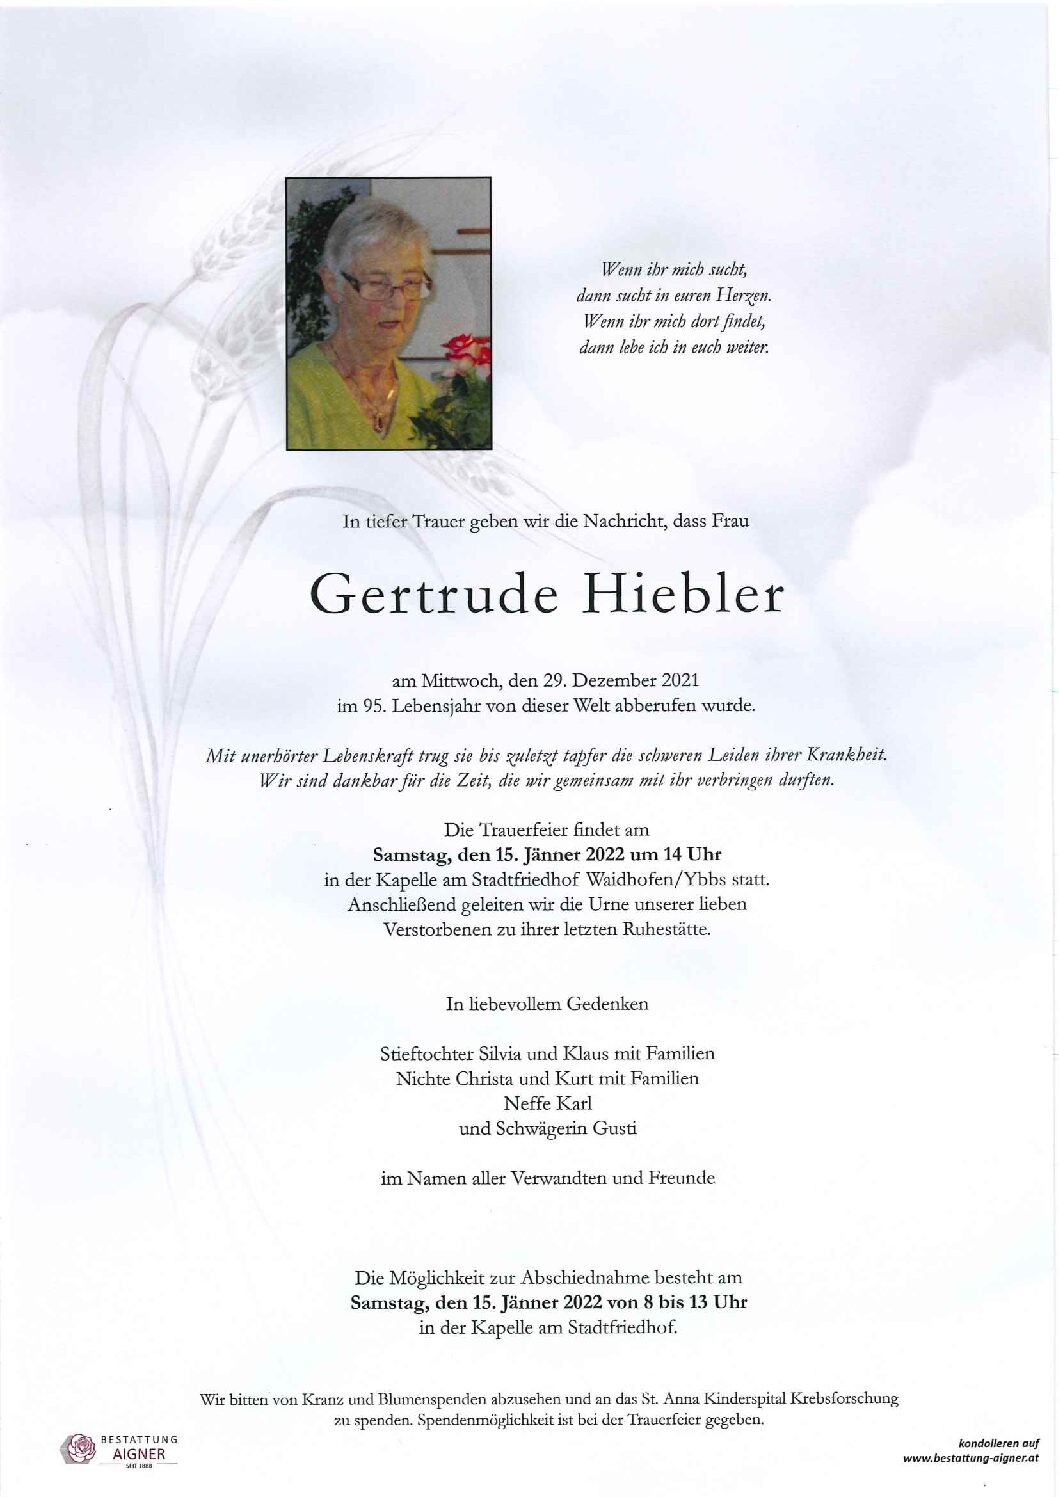 Gertrude Hiebler